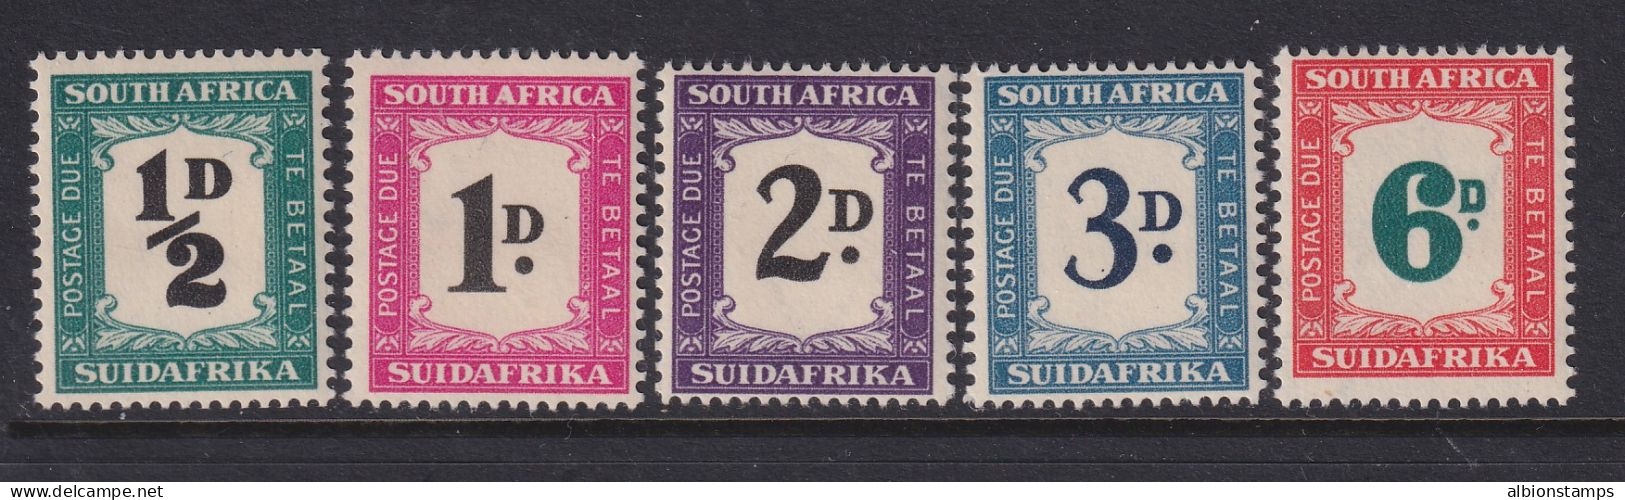 South Africa, Scott J34-J38 (SG D34-D38), MNH - Postage Due